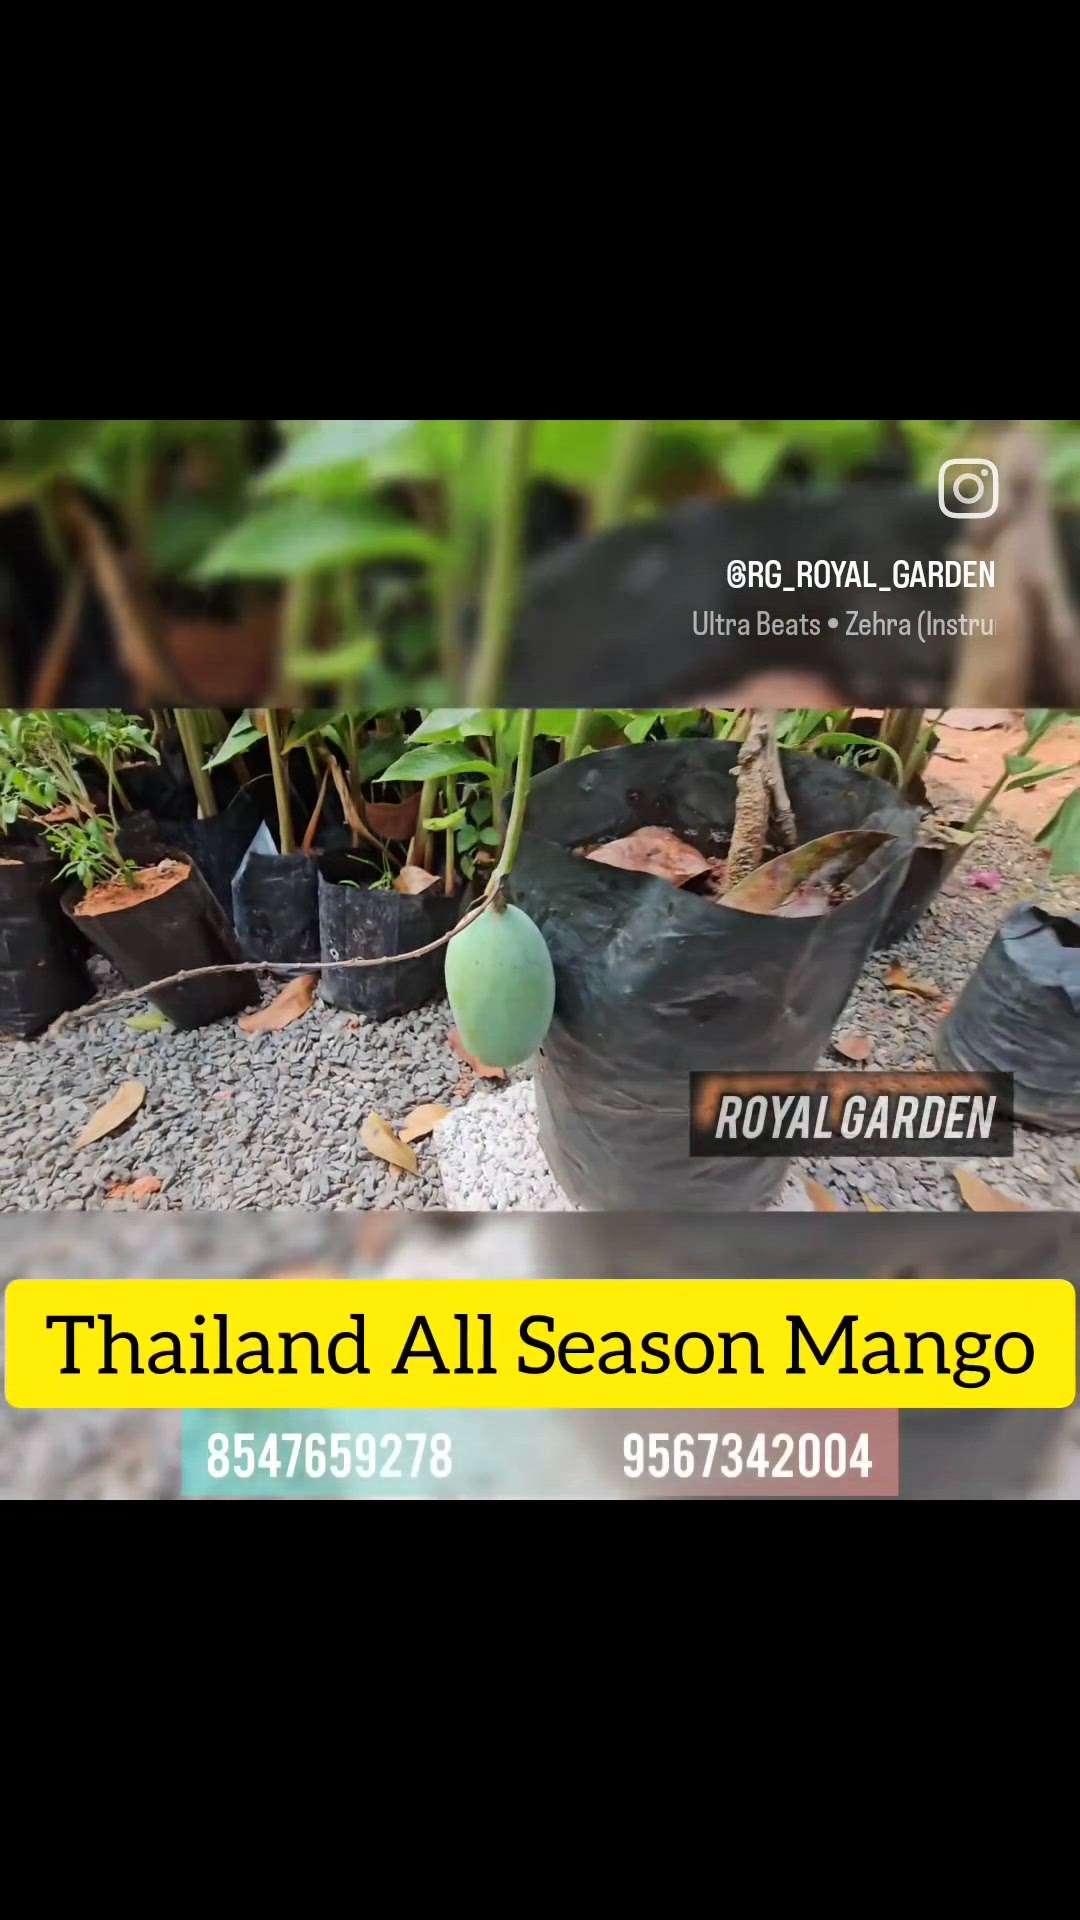 Thailand All Season Mango
[ എല്ലാ സീസണിലും കാഴ്ക്കുന്ന മാവ് . തറയിലും ചട്ടിയിലും നടാവുന്നത് ]
തൈകൾ ആവശ്യമുള്ളവർ വിളിക്കുക
8547659278. 9567342004
#newreel #trending #homedecor #gardeninspiration #GardeningIdeas  #LandscapeIdeas